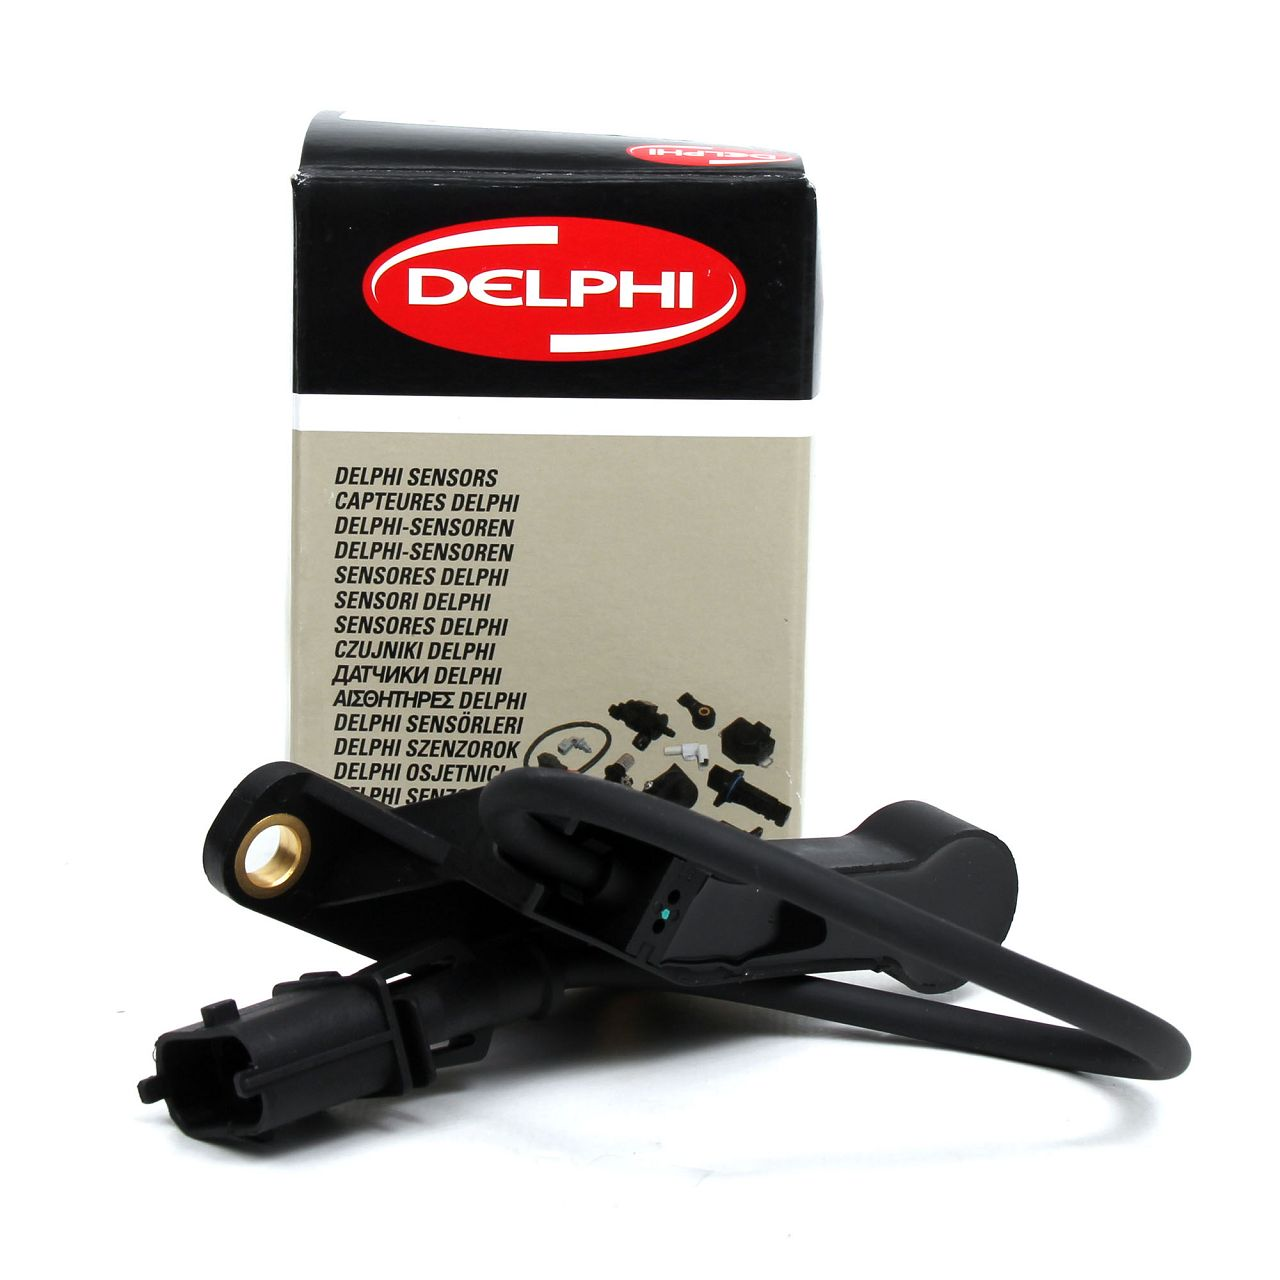 DELPHI SS10884 | Opel Vectra C 1.8 Benzinli (Z18XE) Eksantrik Devir Sensörü